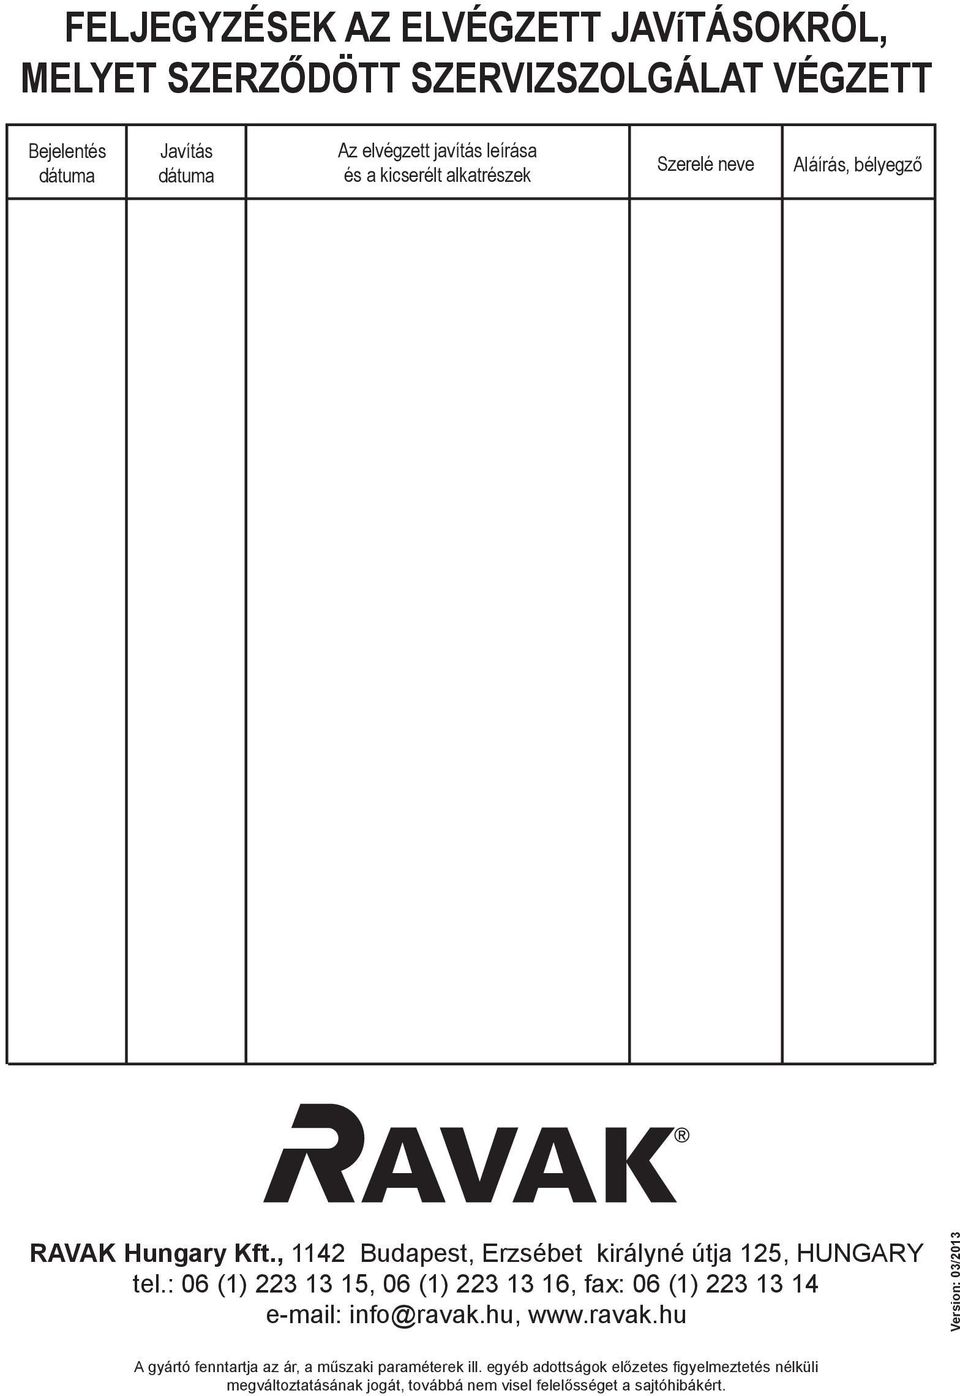 : 06 (1) 223 13 15, 06 (1) 223 13 16, fax: 06 (1) 223 13 14 e-mail: info@ravak.